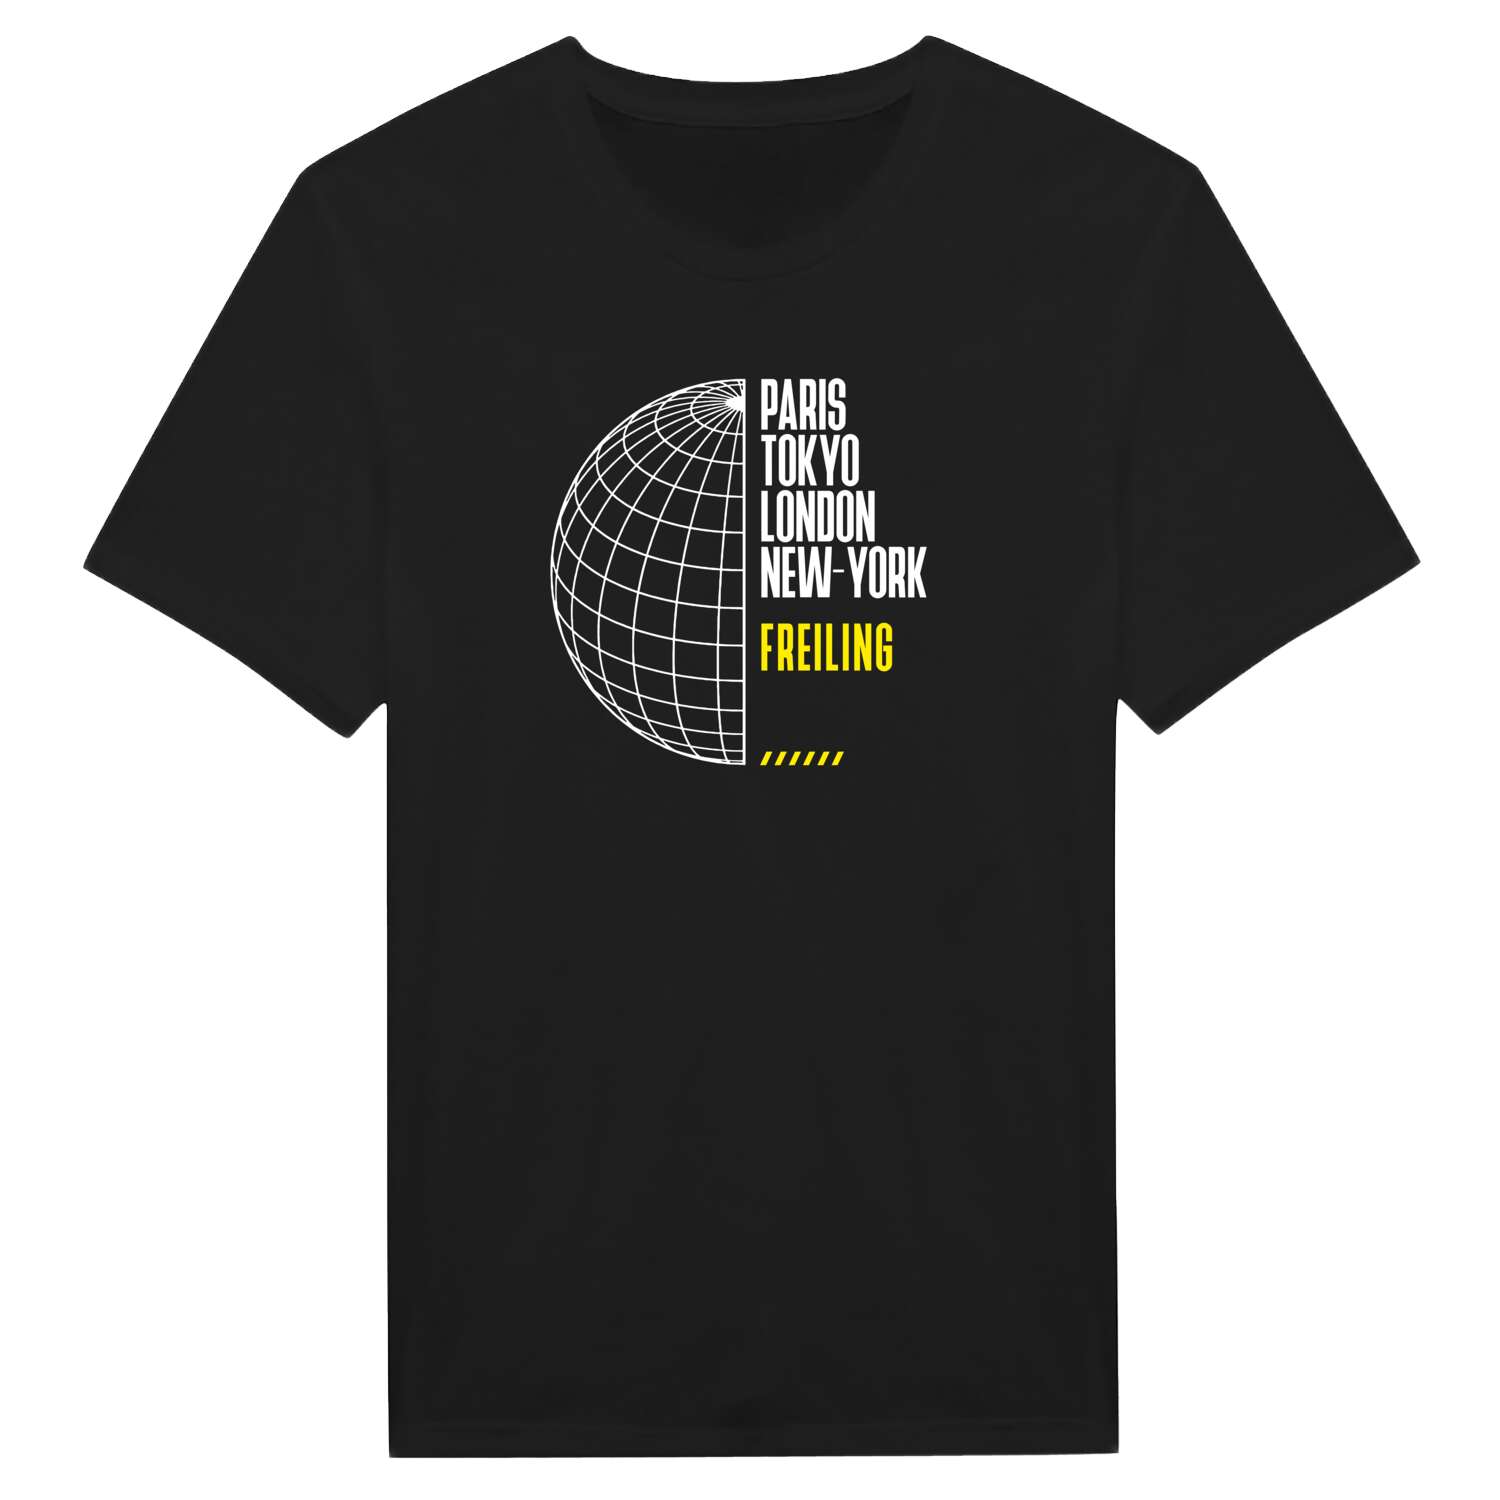 Freiling T-Shirt »Paris Tokyo London«